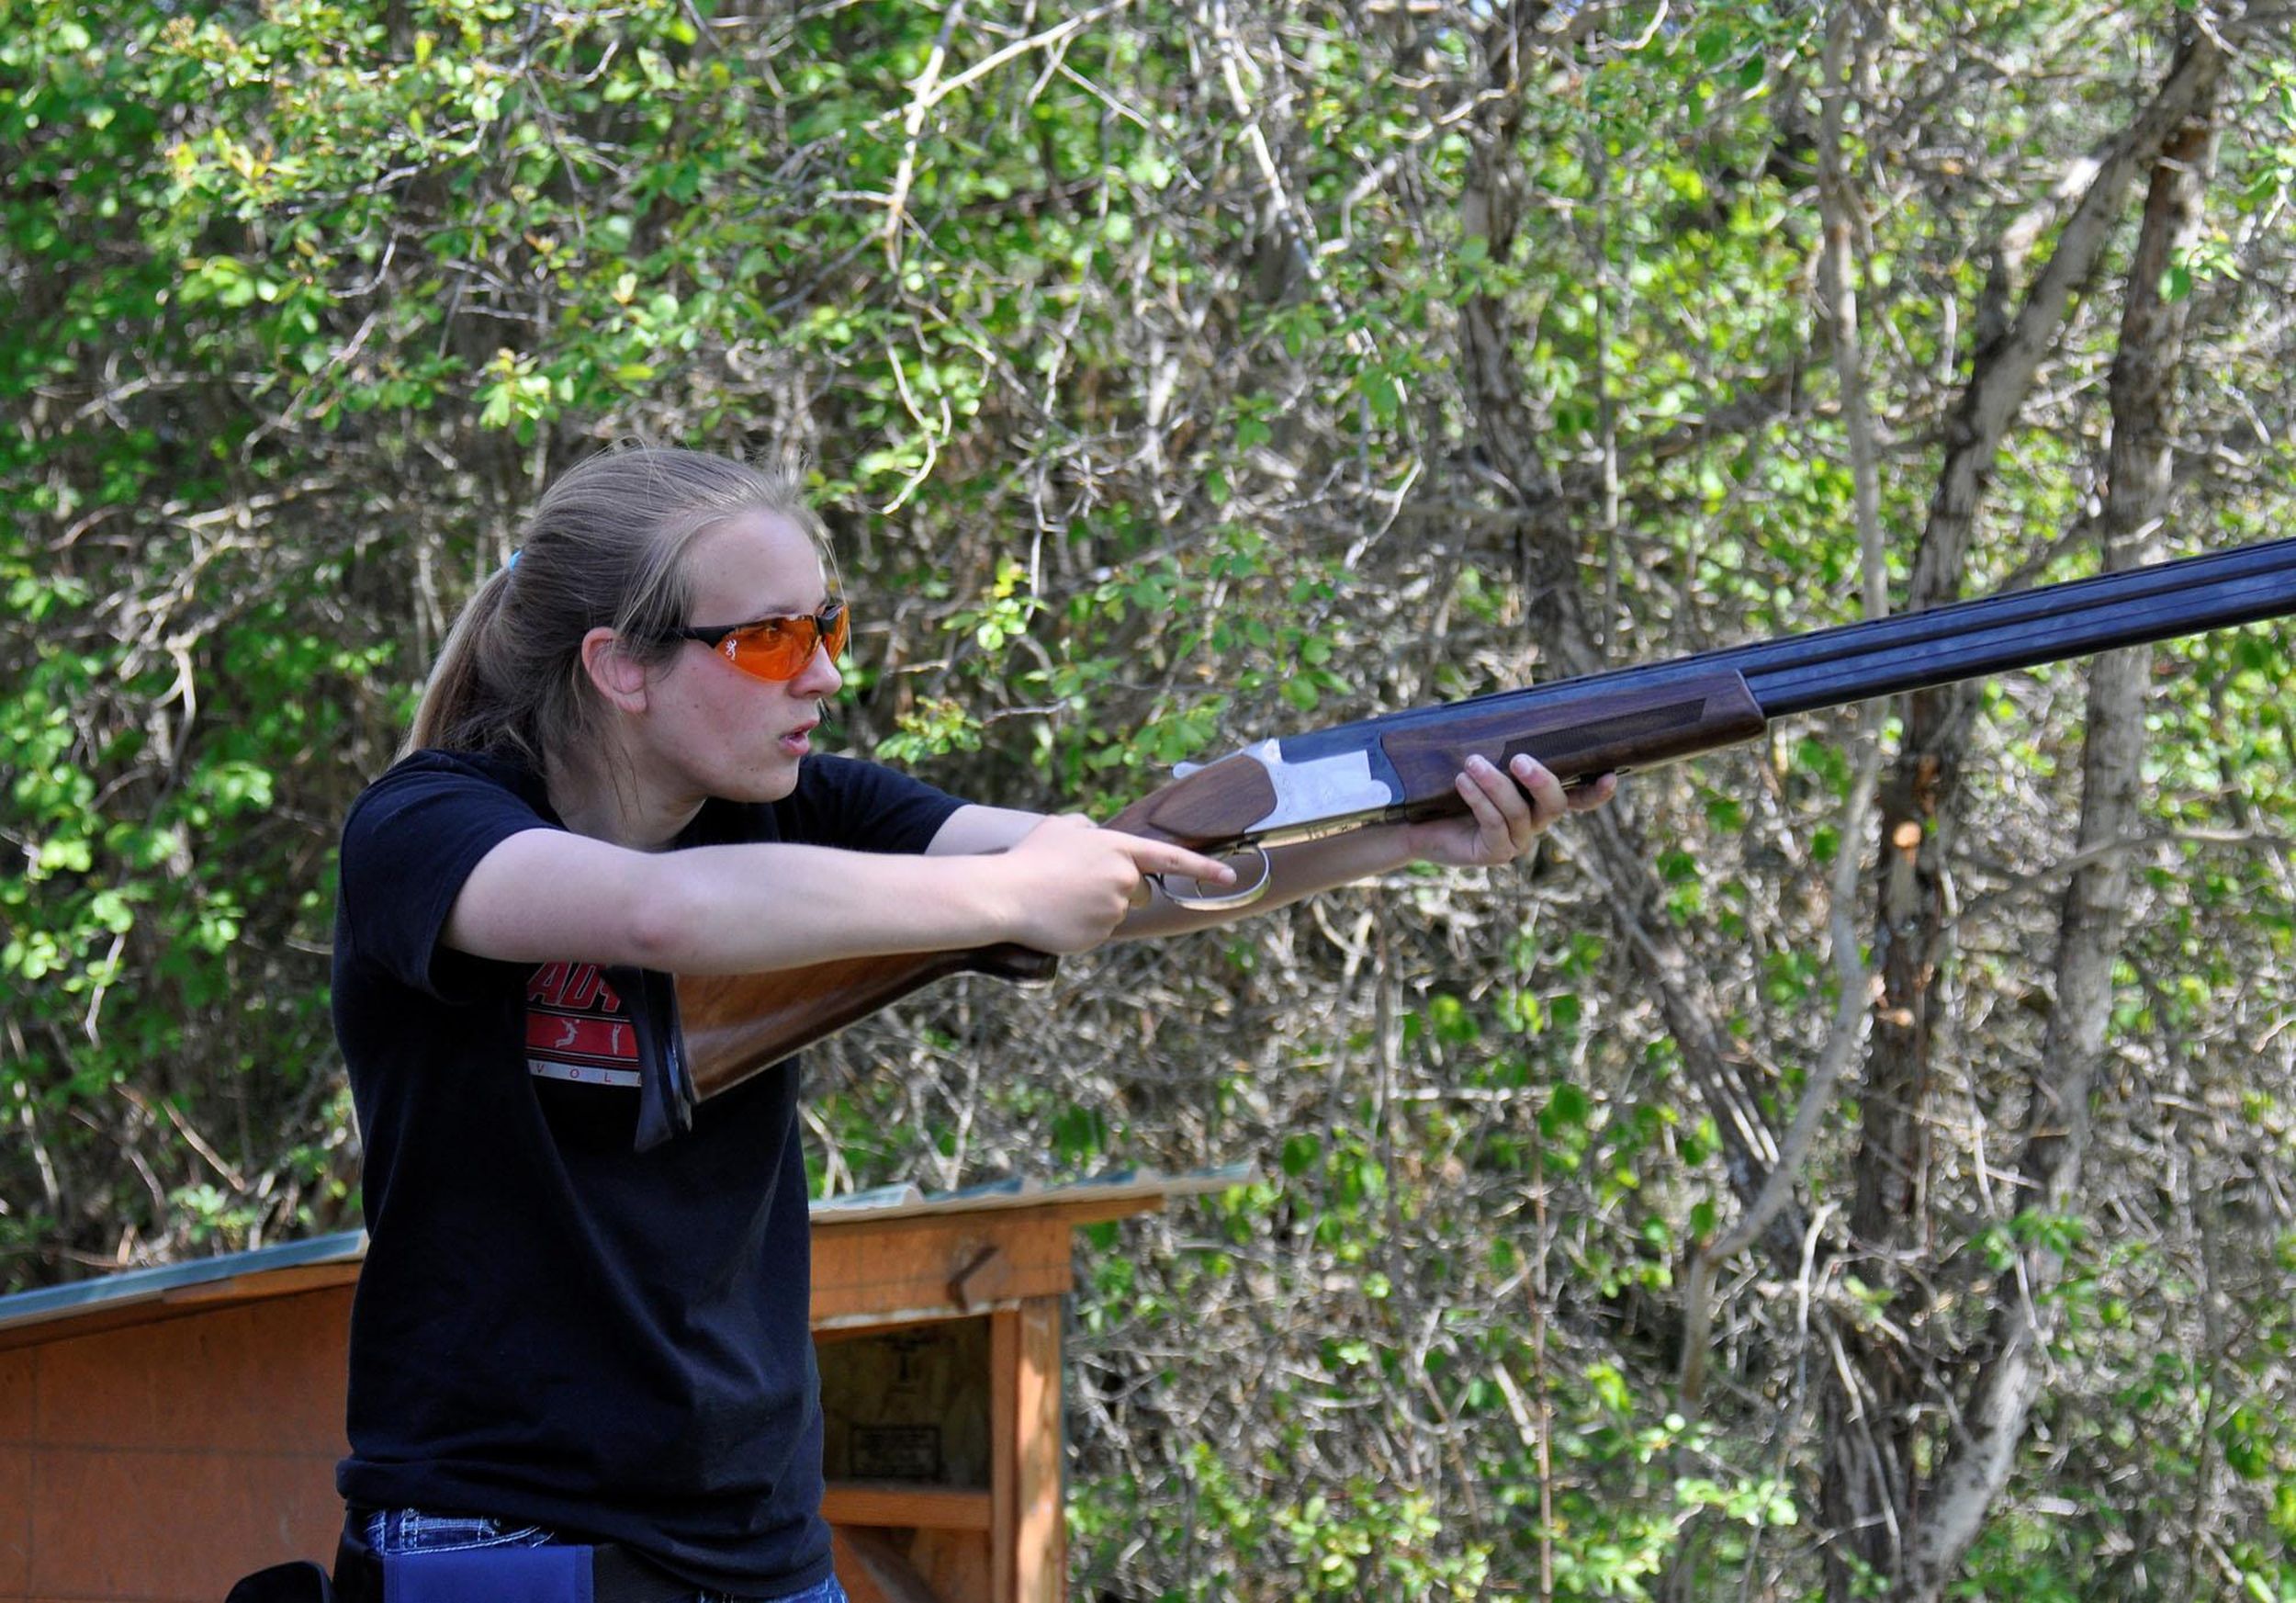 Clay-target shooting is a growing high school sport in Oregon ...